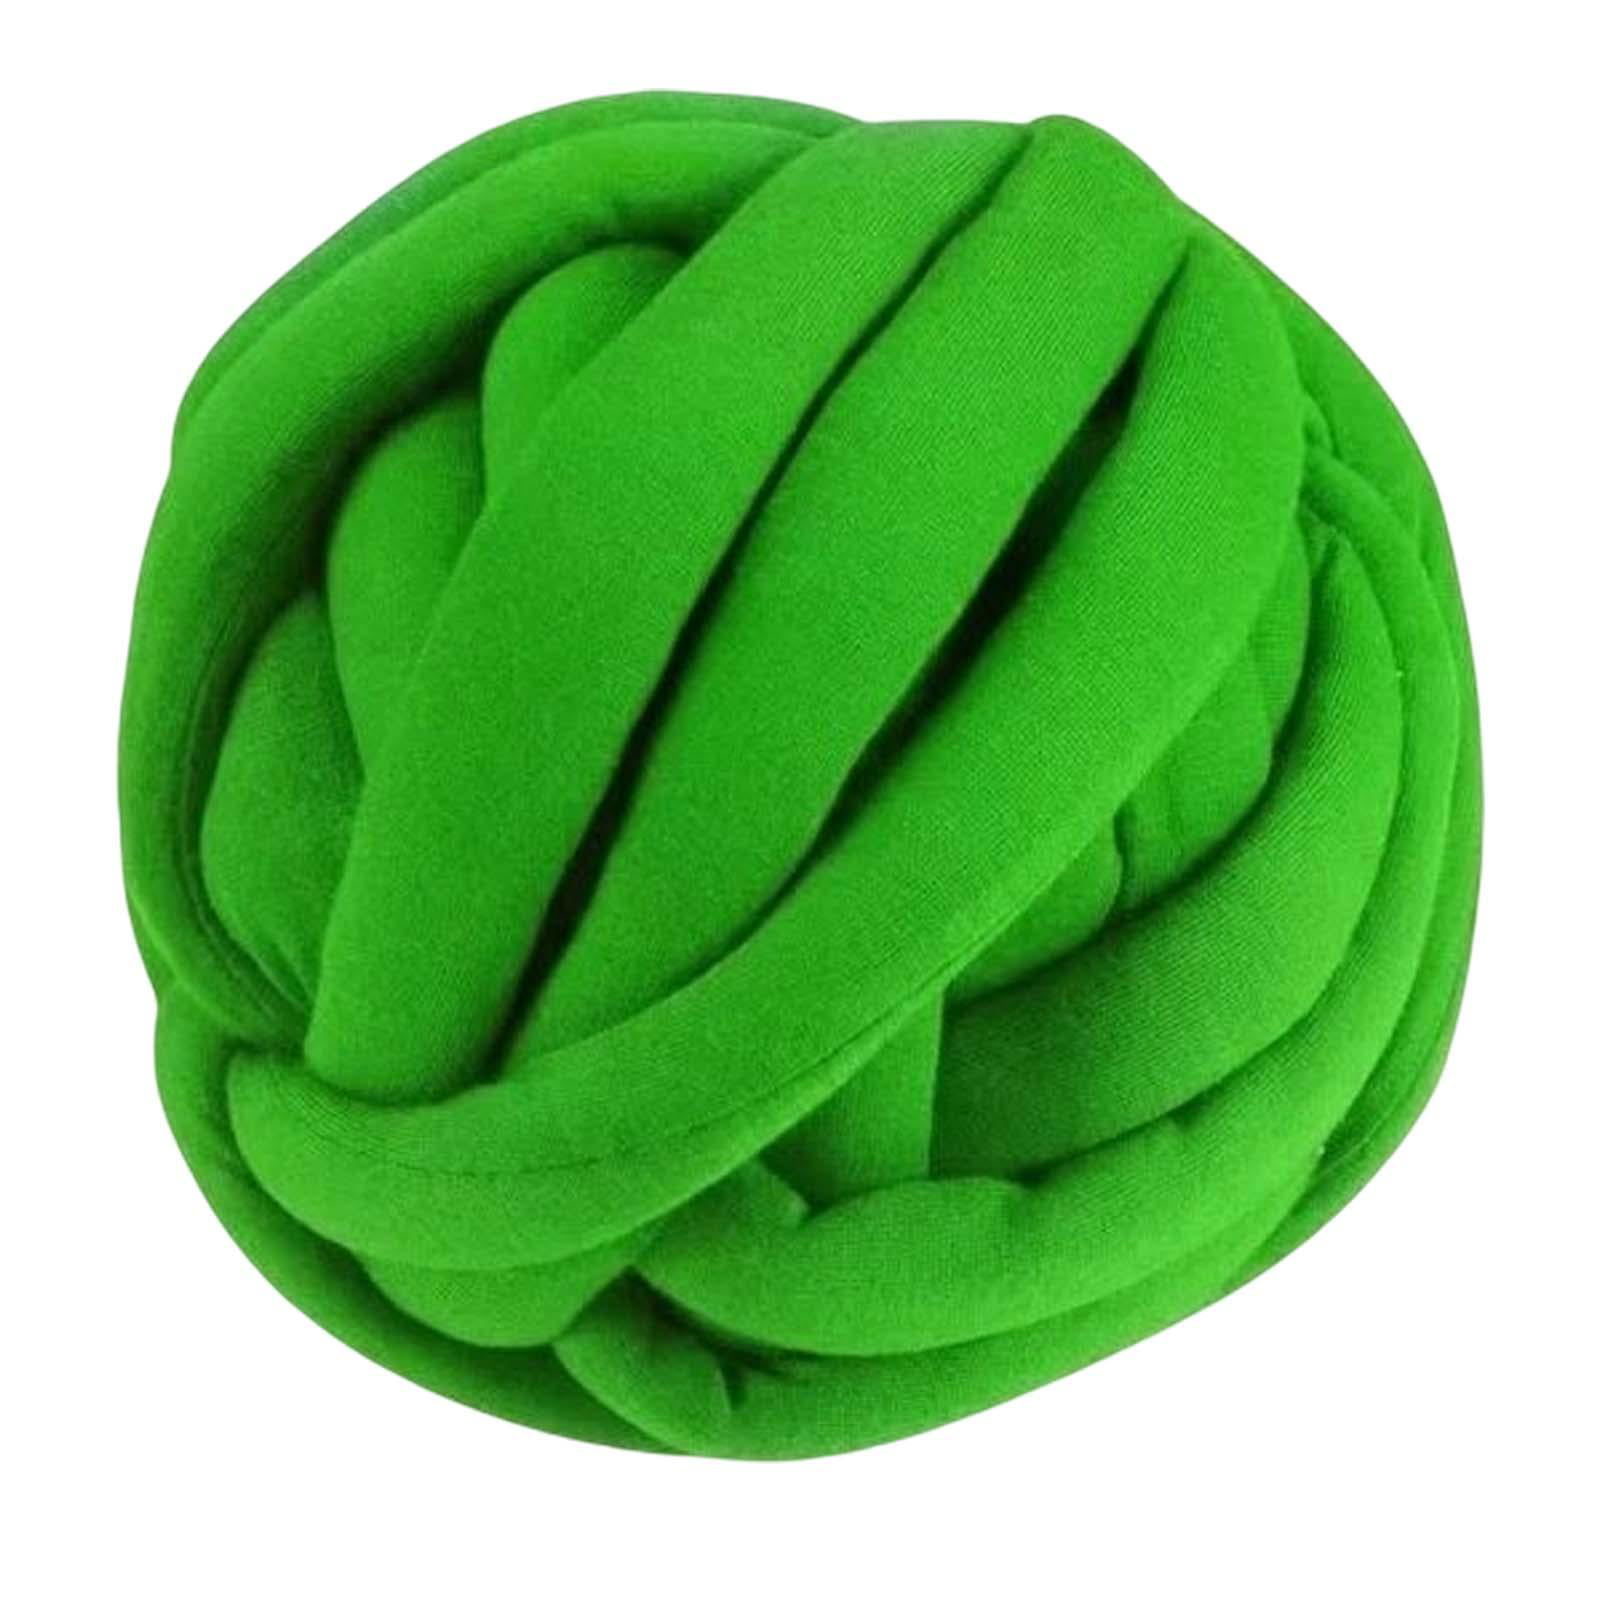  Chunky Knit Chenille Yarn Dark Green,Chunky Yarn Bulky Vegan  Soft Yarn Washable Soft Chunky Yarn for Arm Knitting DIY Yarn Handmade  Blankets Pet Bed Rug,500g/17.64 Oz